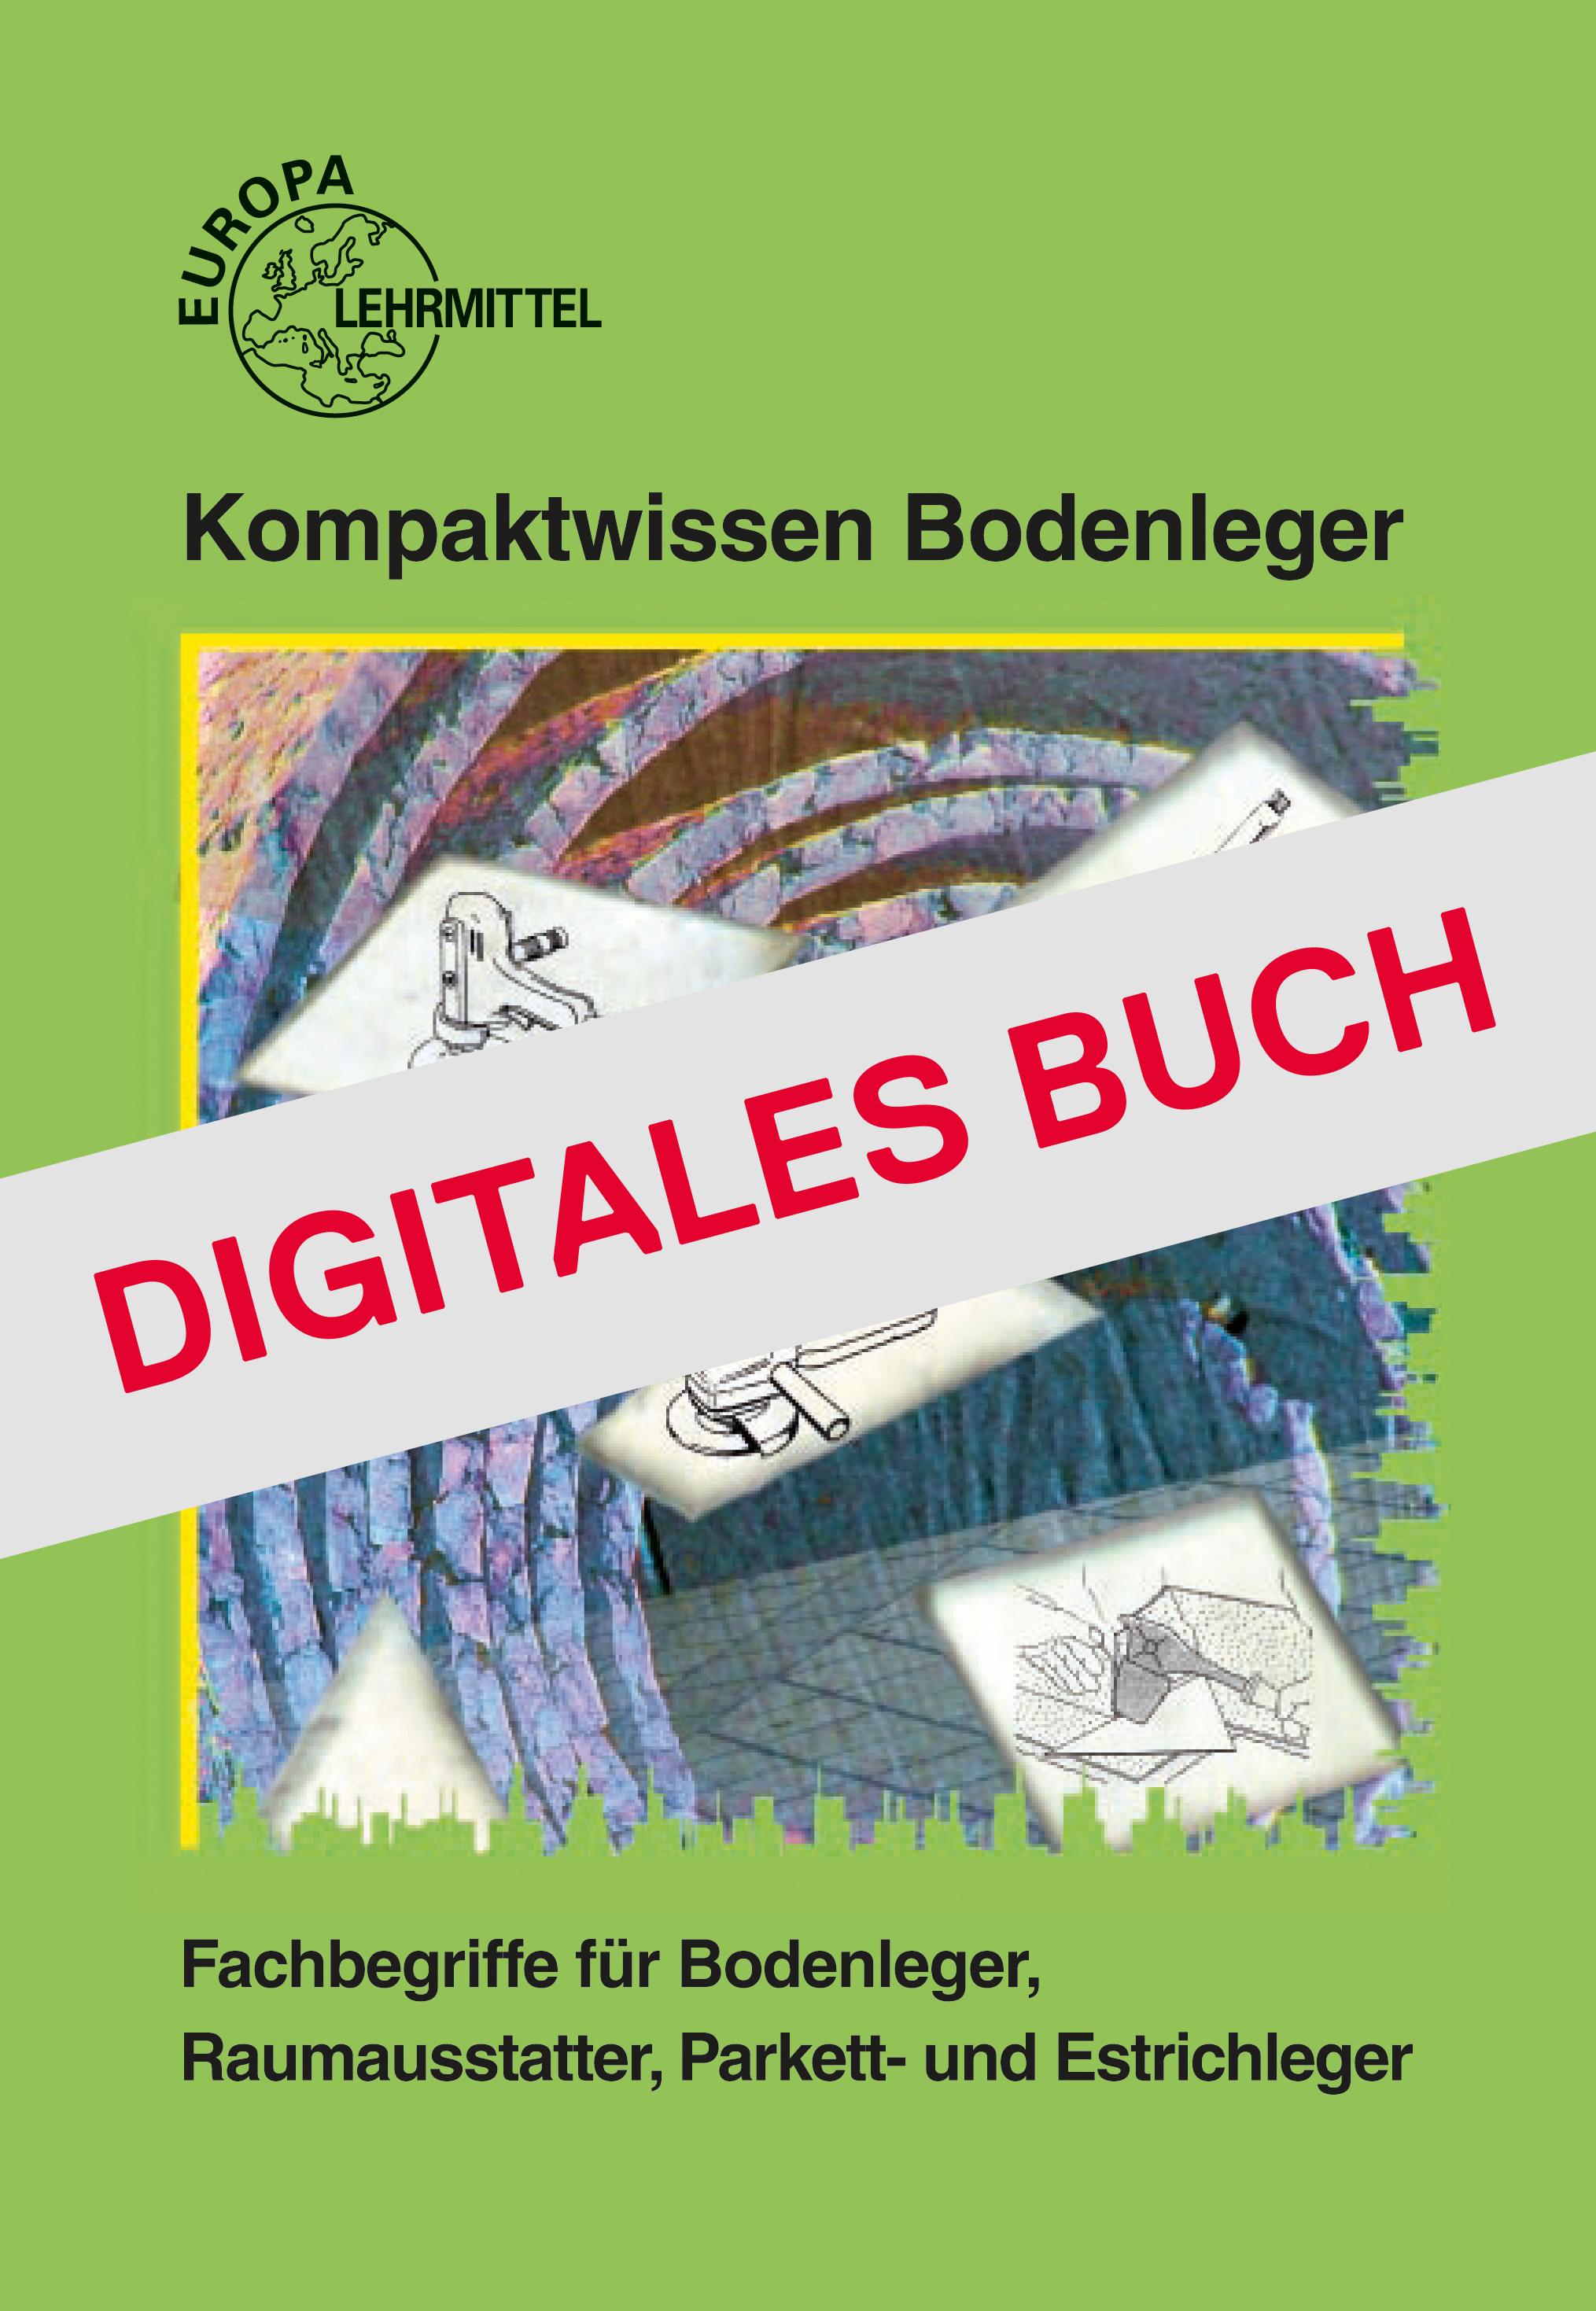 Kompaktwissen Bodenleger Digitales Buch 